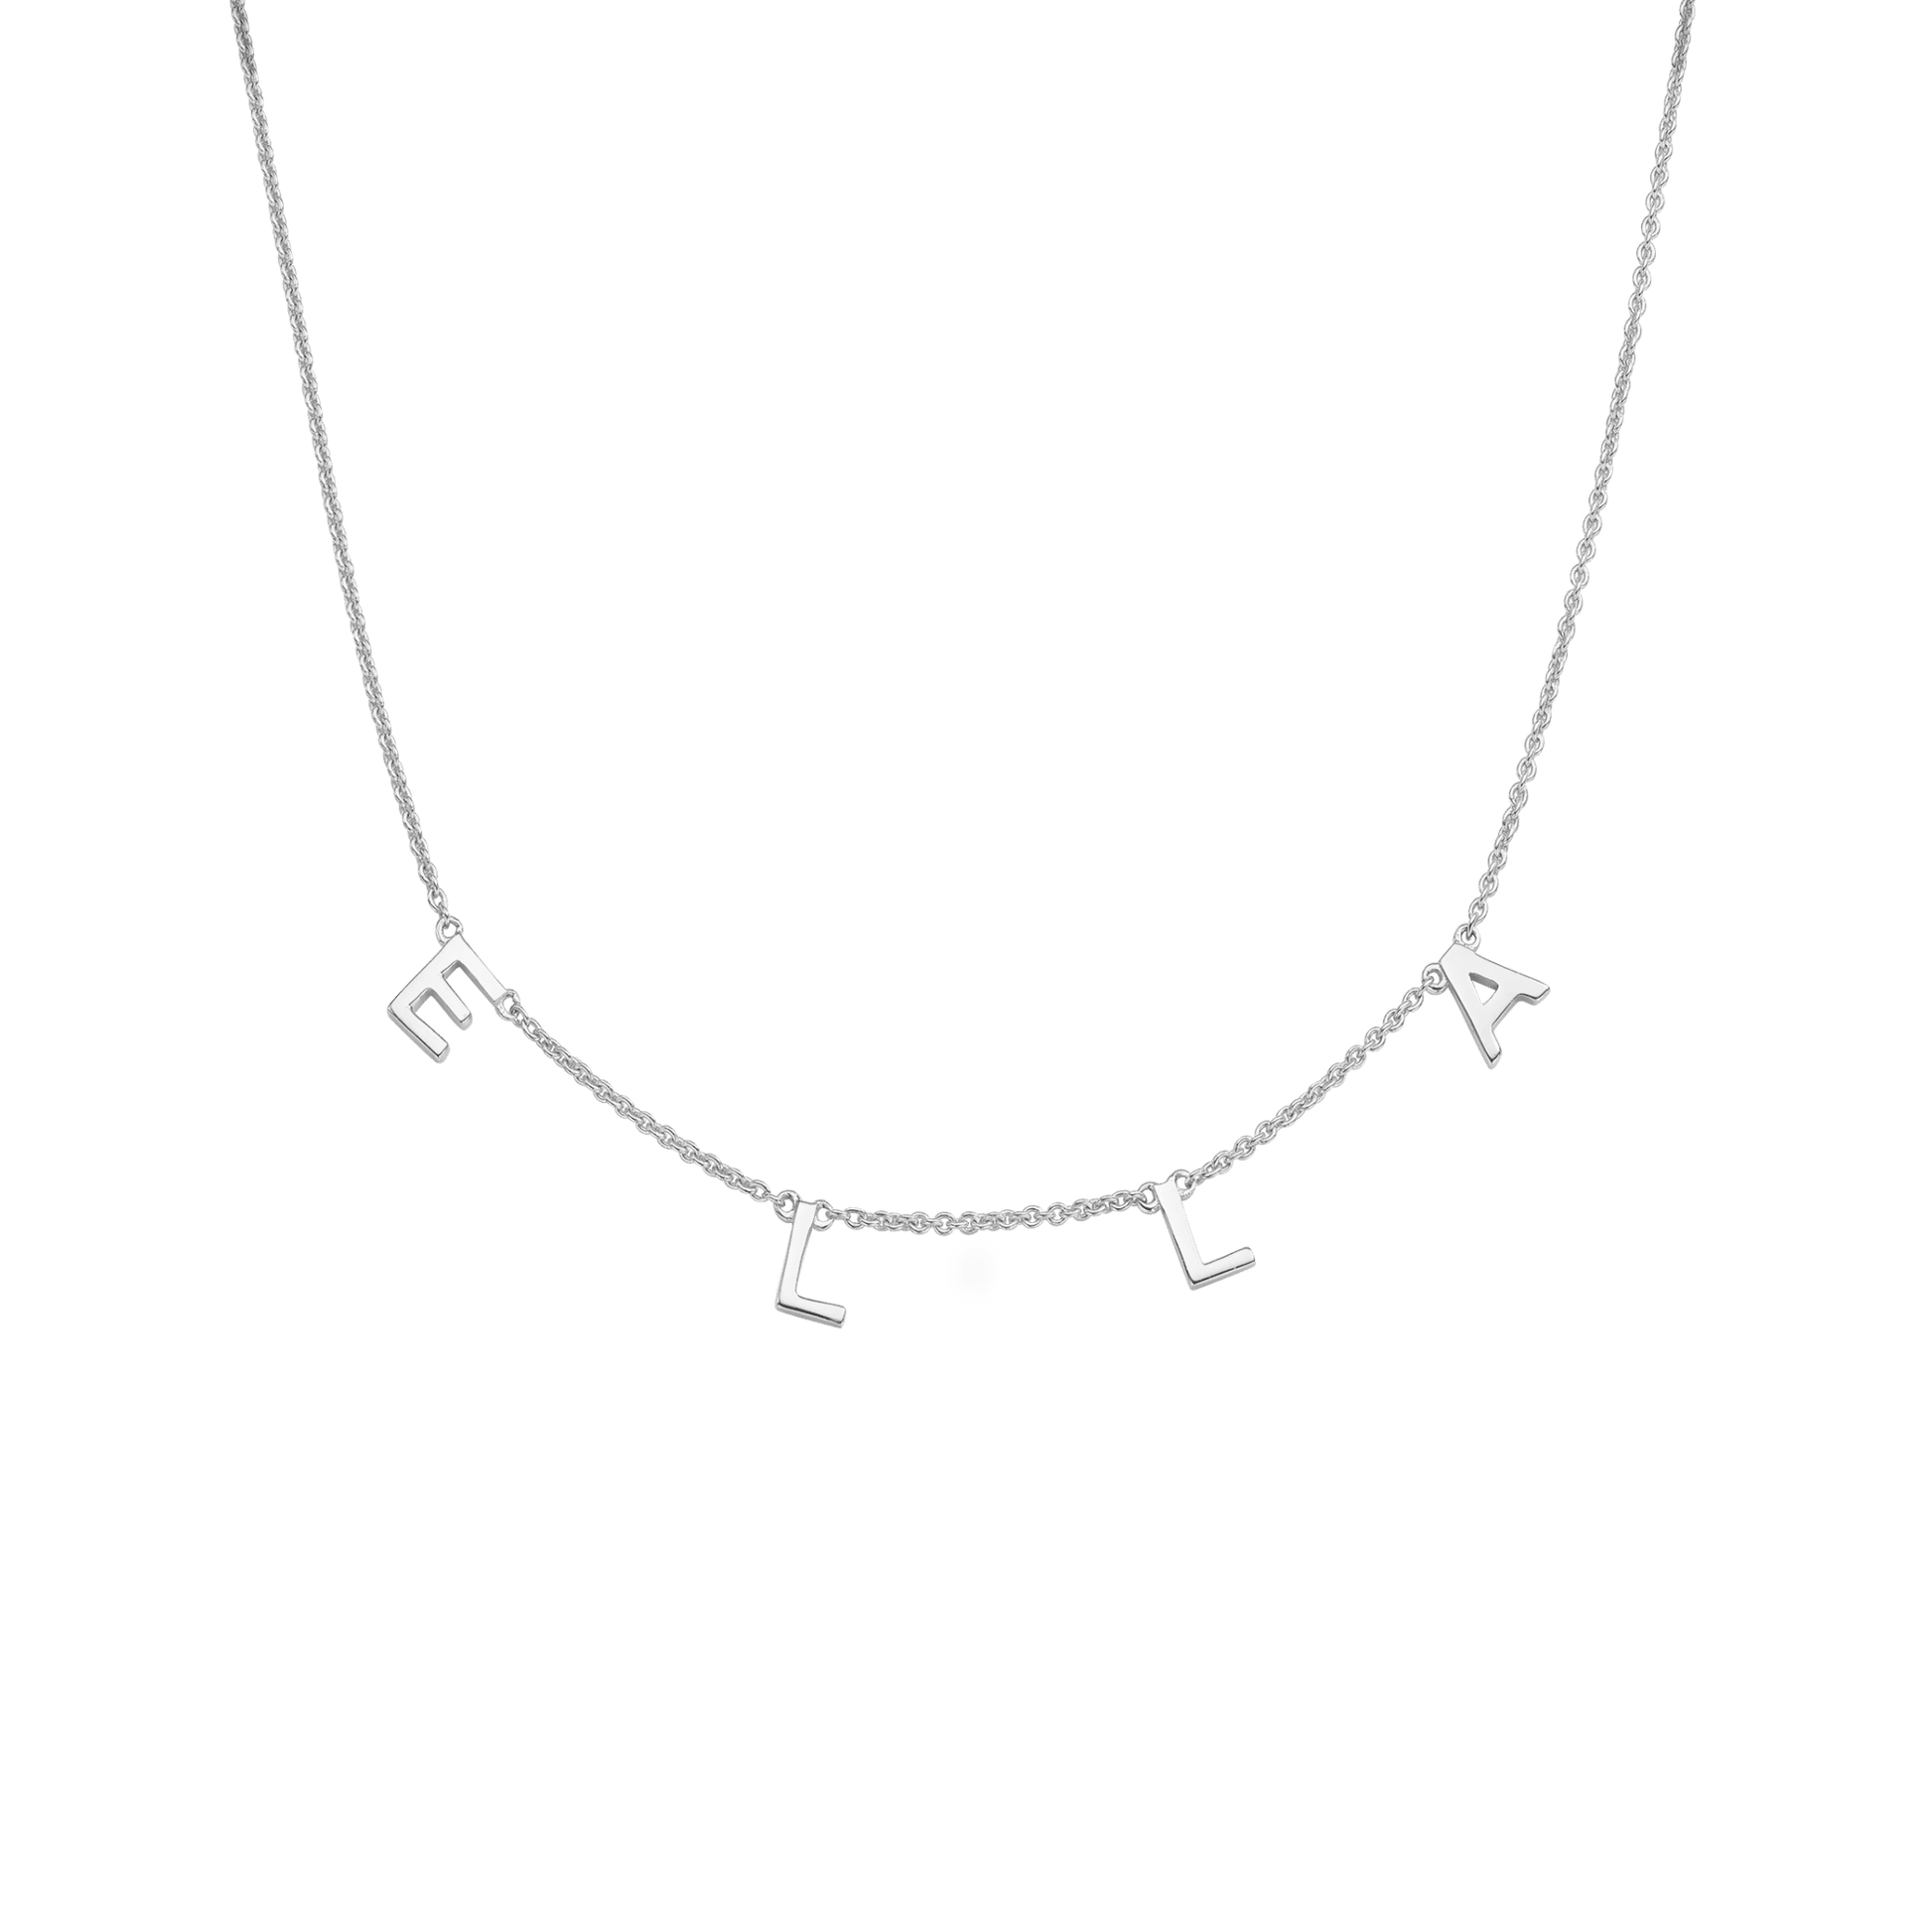 Name Necklace - 14K White Gold Necklaces magal-dev 1 Initial Adjustable 16-17" (40cm-43cm) 